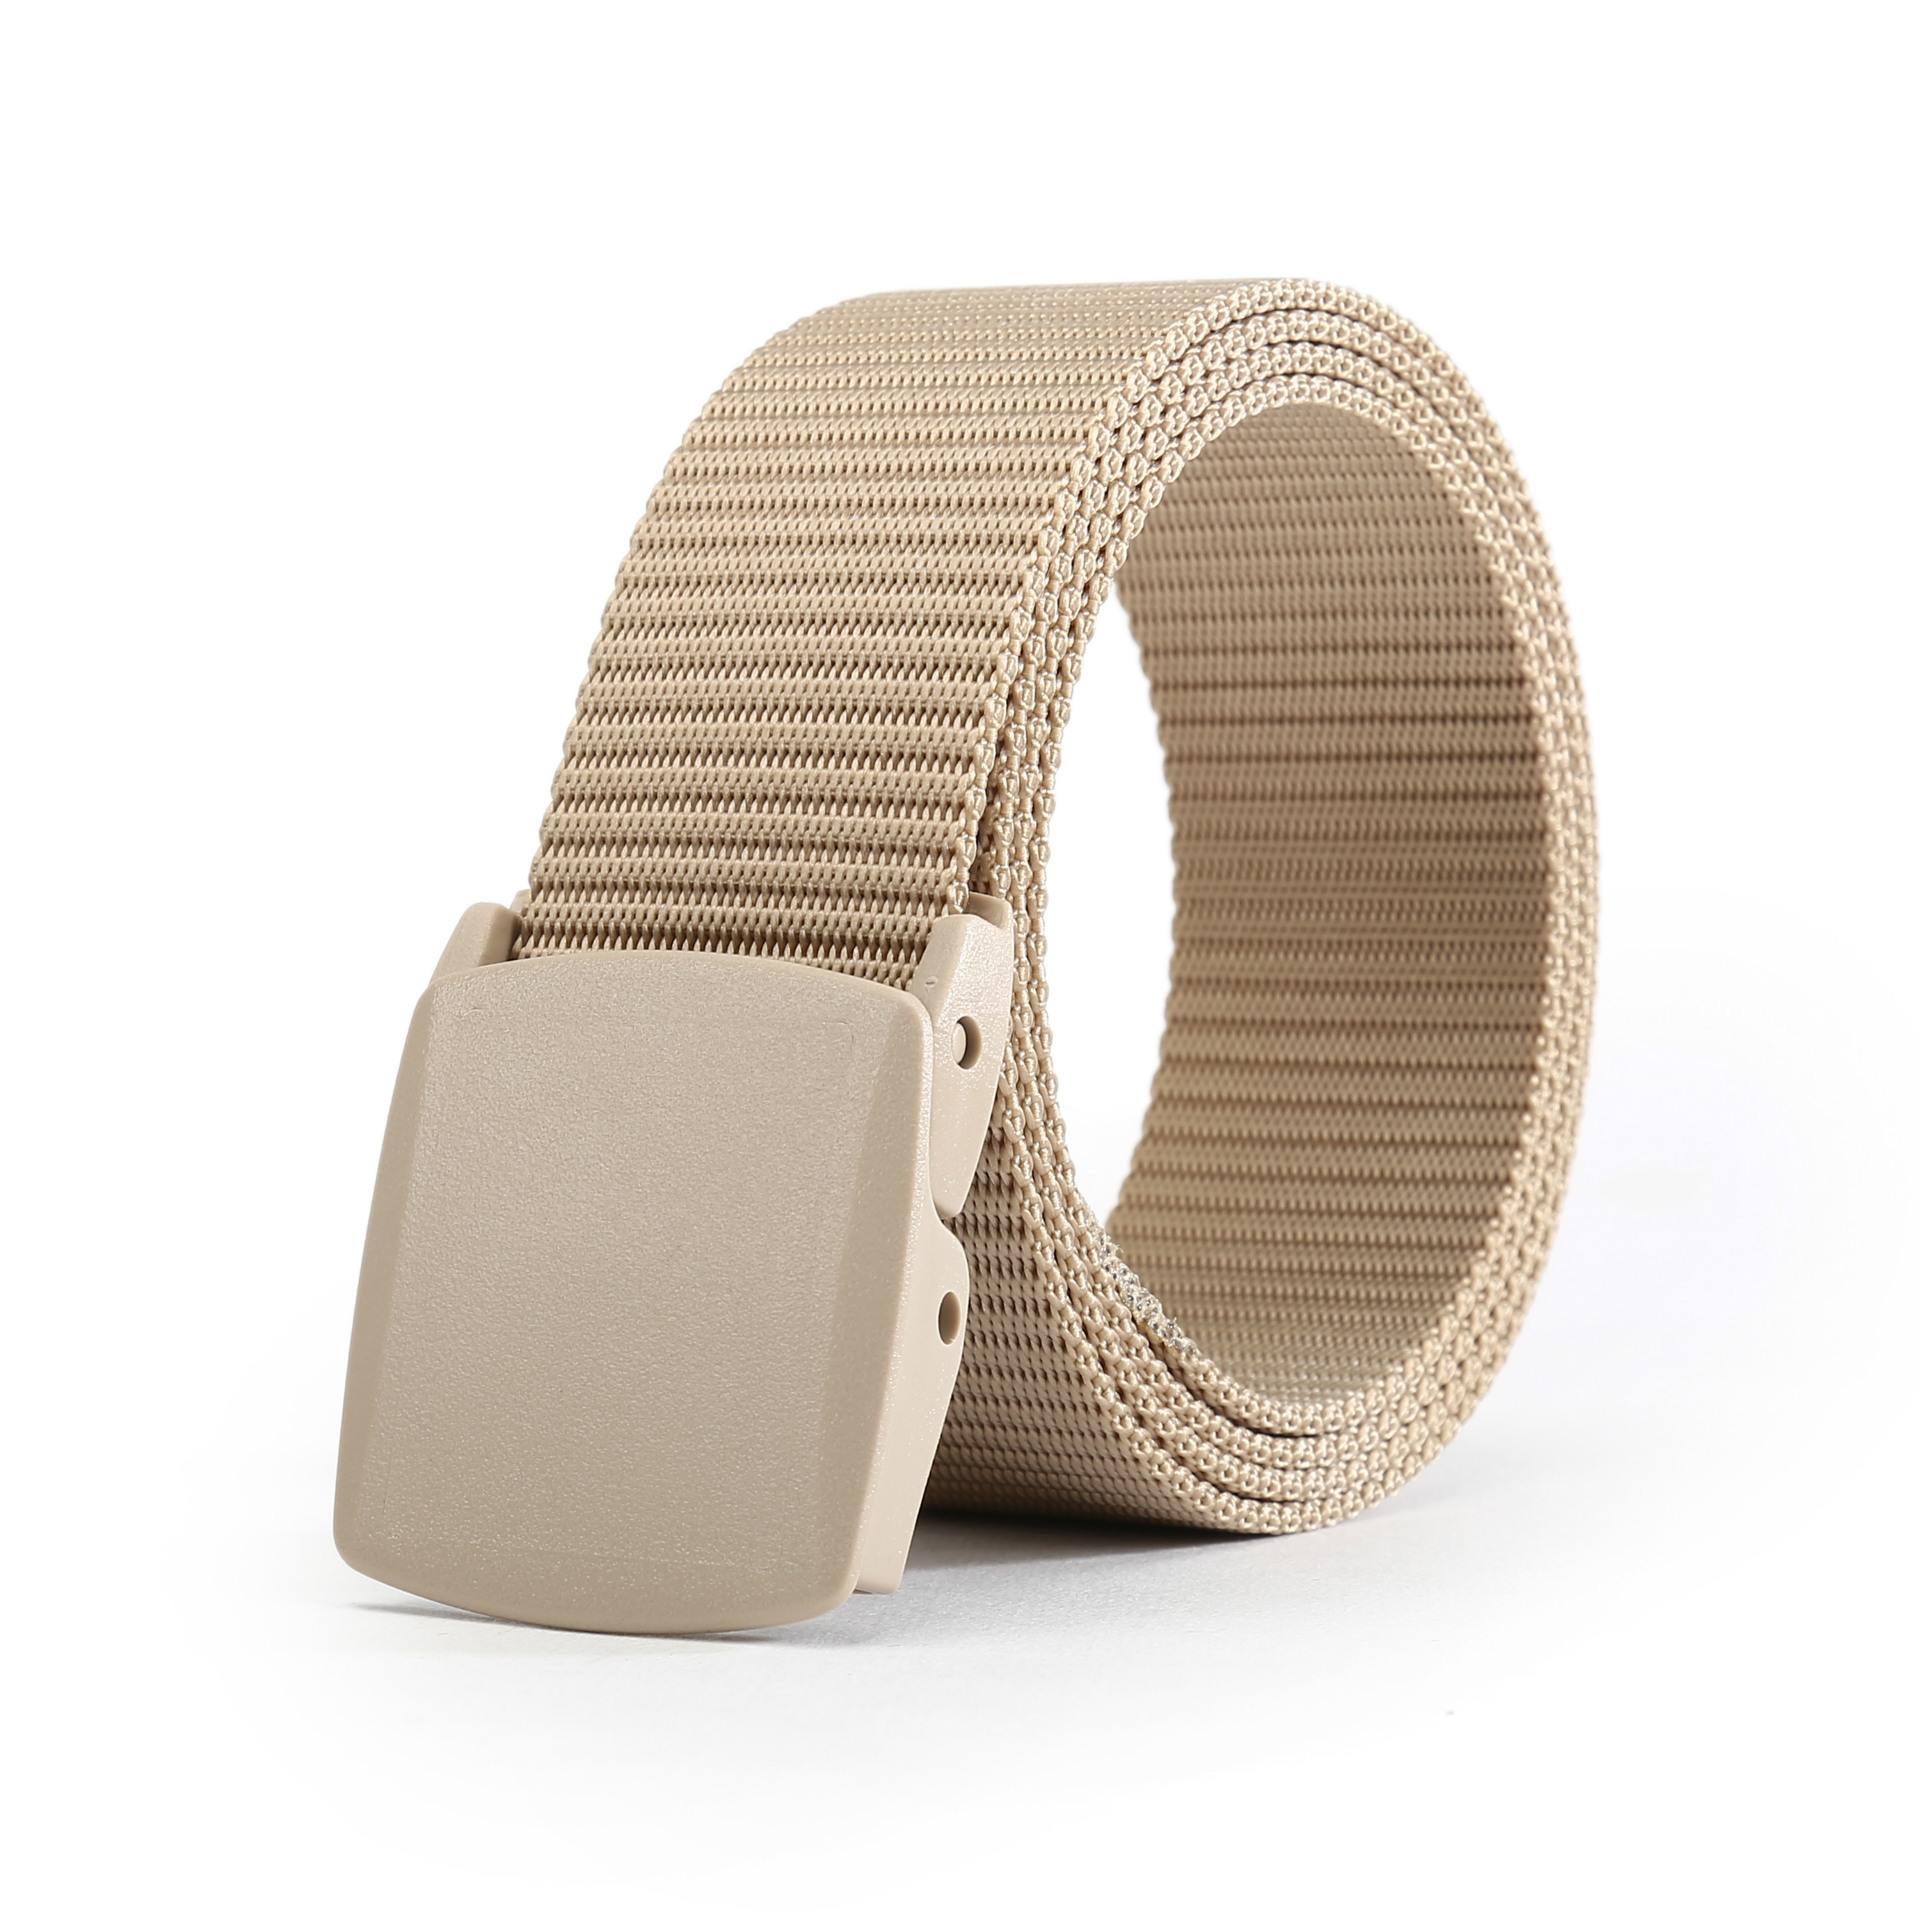 Plastic Buckle High Quality Custom Tactical Belt Military Duty Belt Outdoor Sport Belts